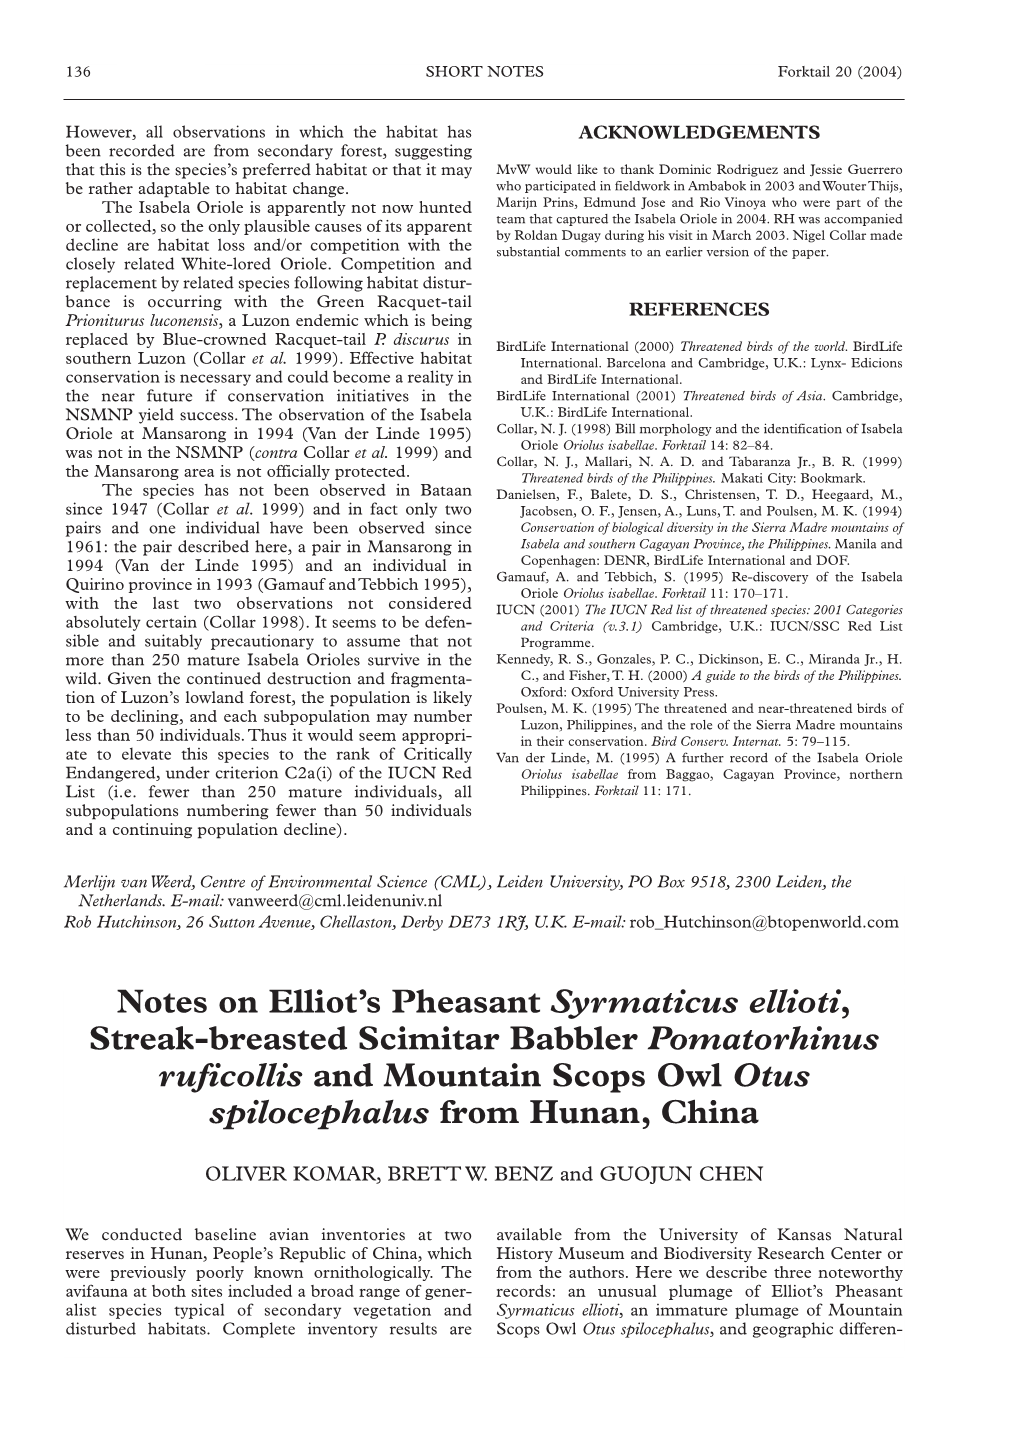 Notes on Elliot's Pheasant Syrmaticus Ellioti, Streak-Breasted Scimitar Babbler Pomatorhinus Ruficollis and Mountain Scops